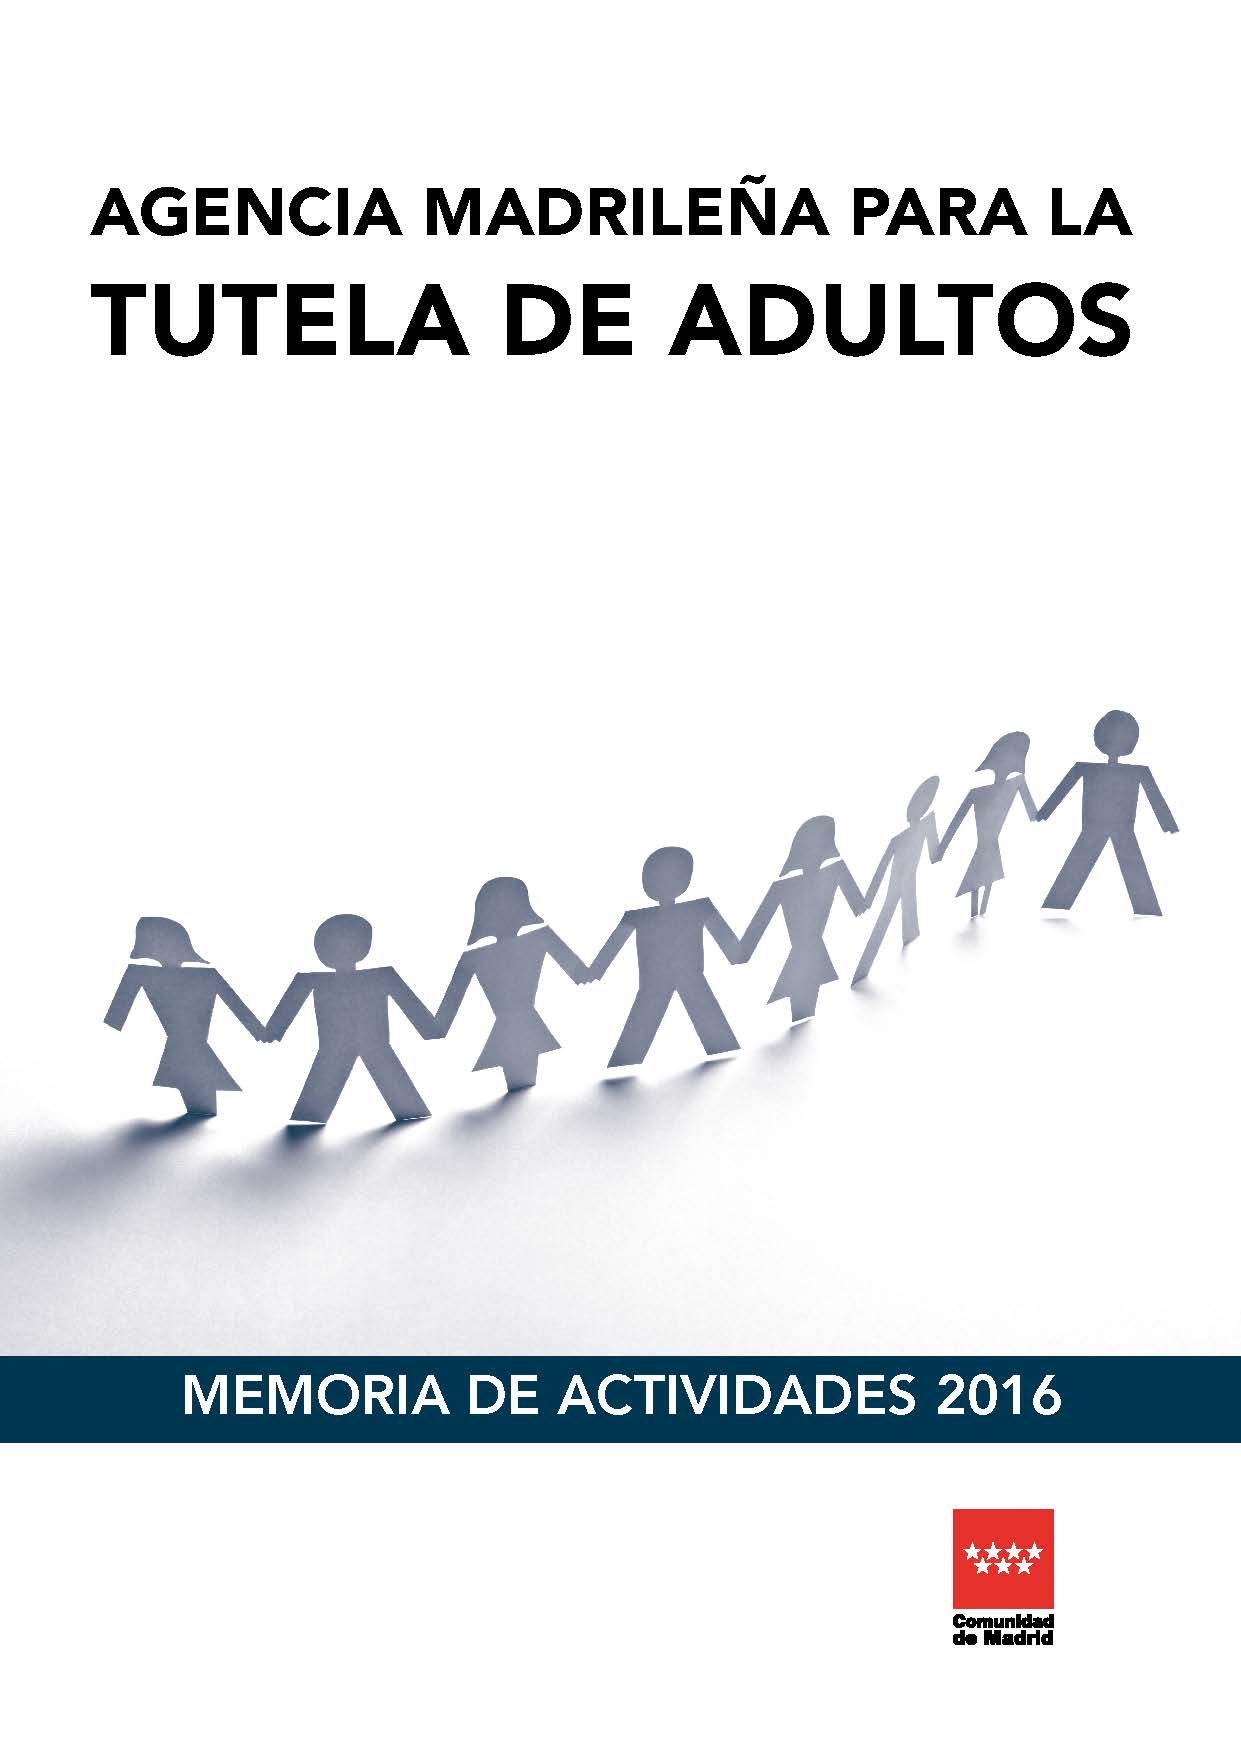 Portada de Memoria de actividades 2016. Agencia Madrileña para la Tutela de Adultos.